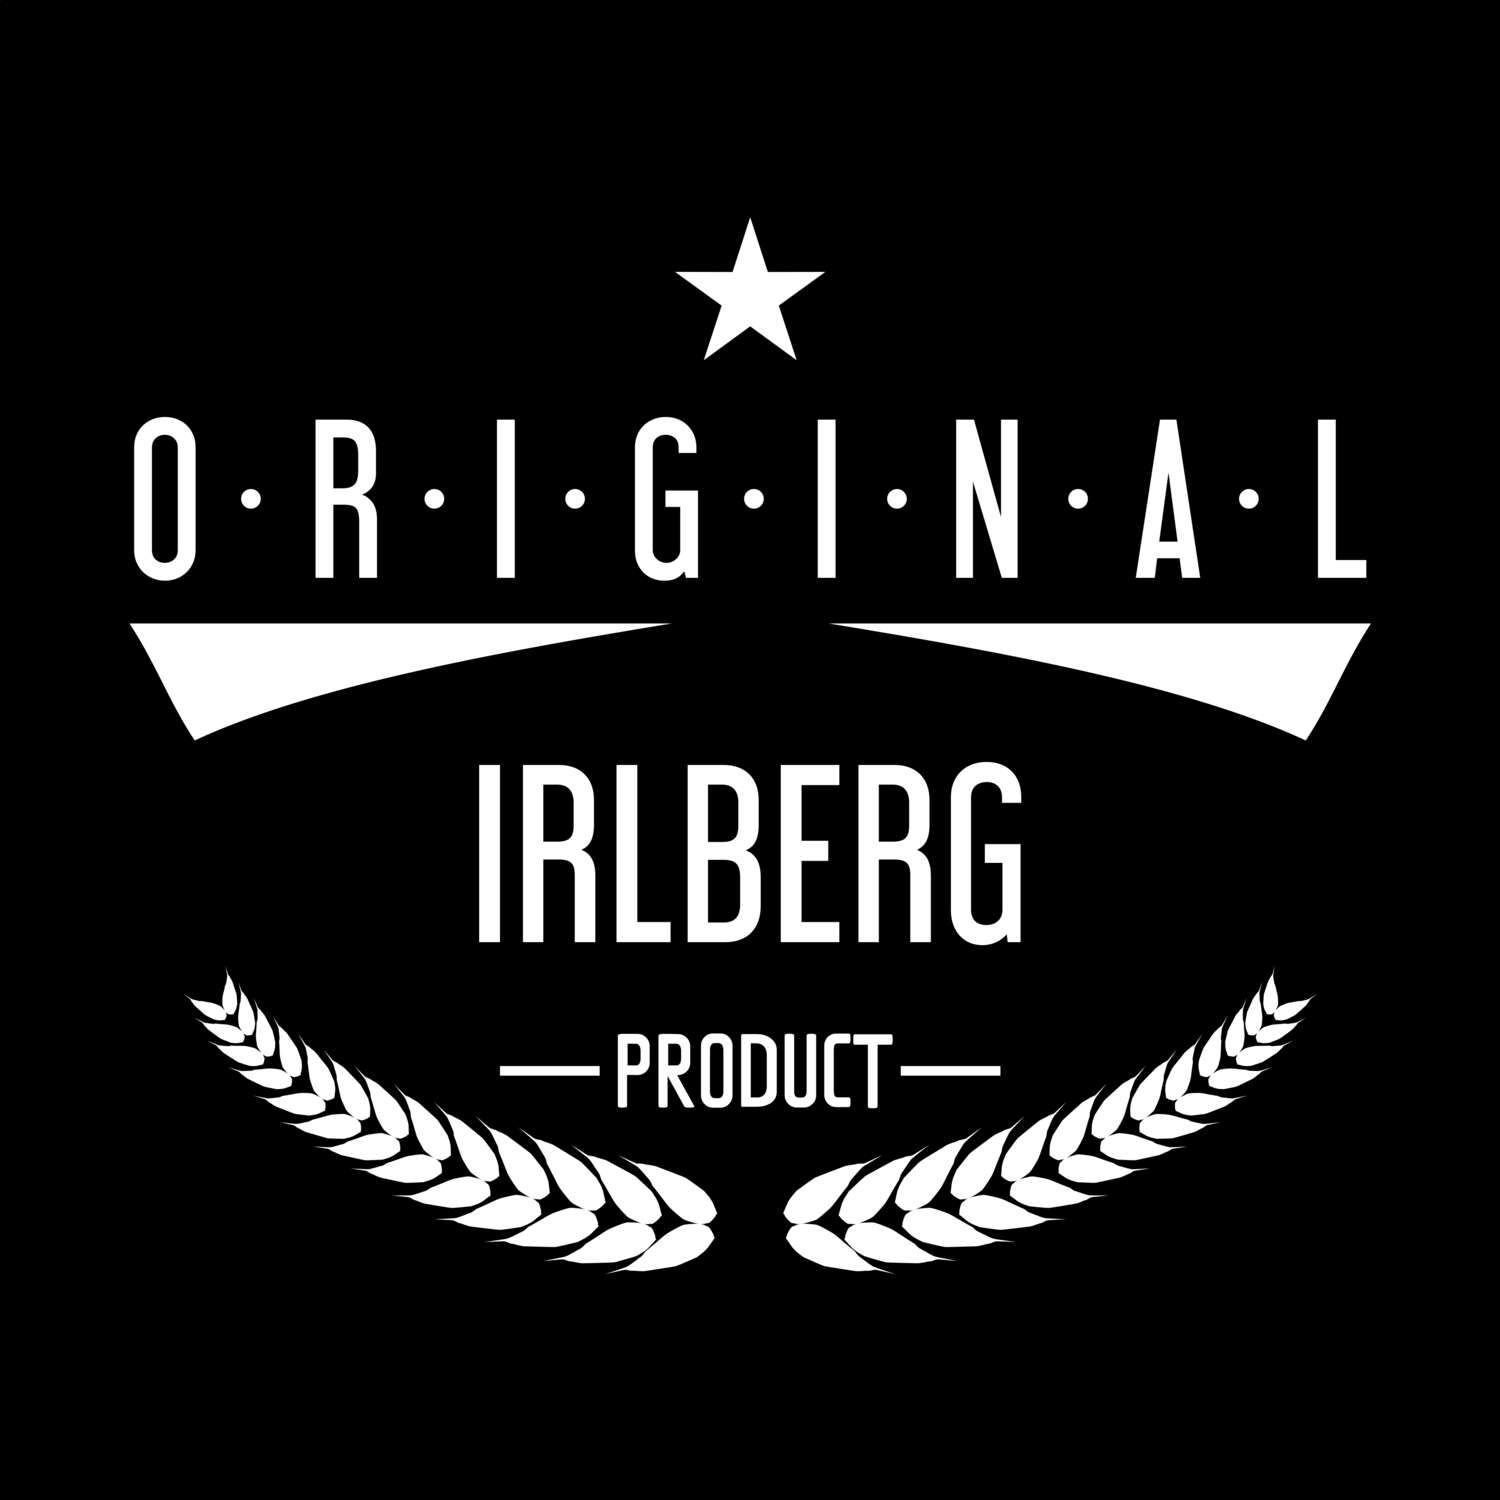 Irlberg T-Shirt »Original Product«